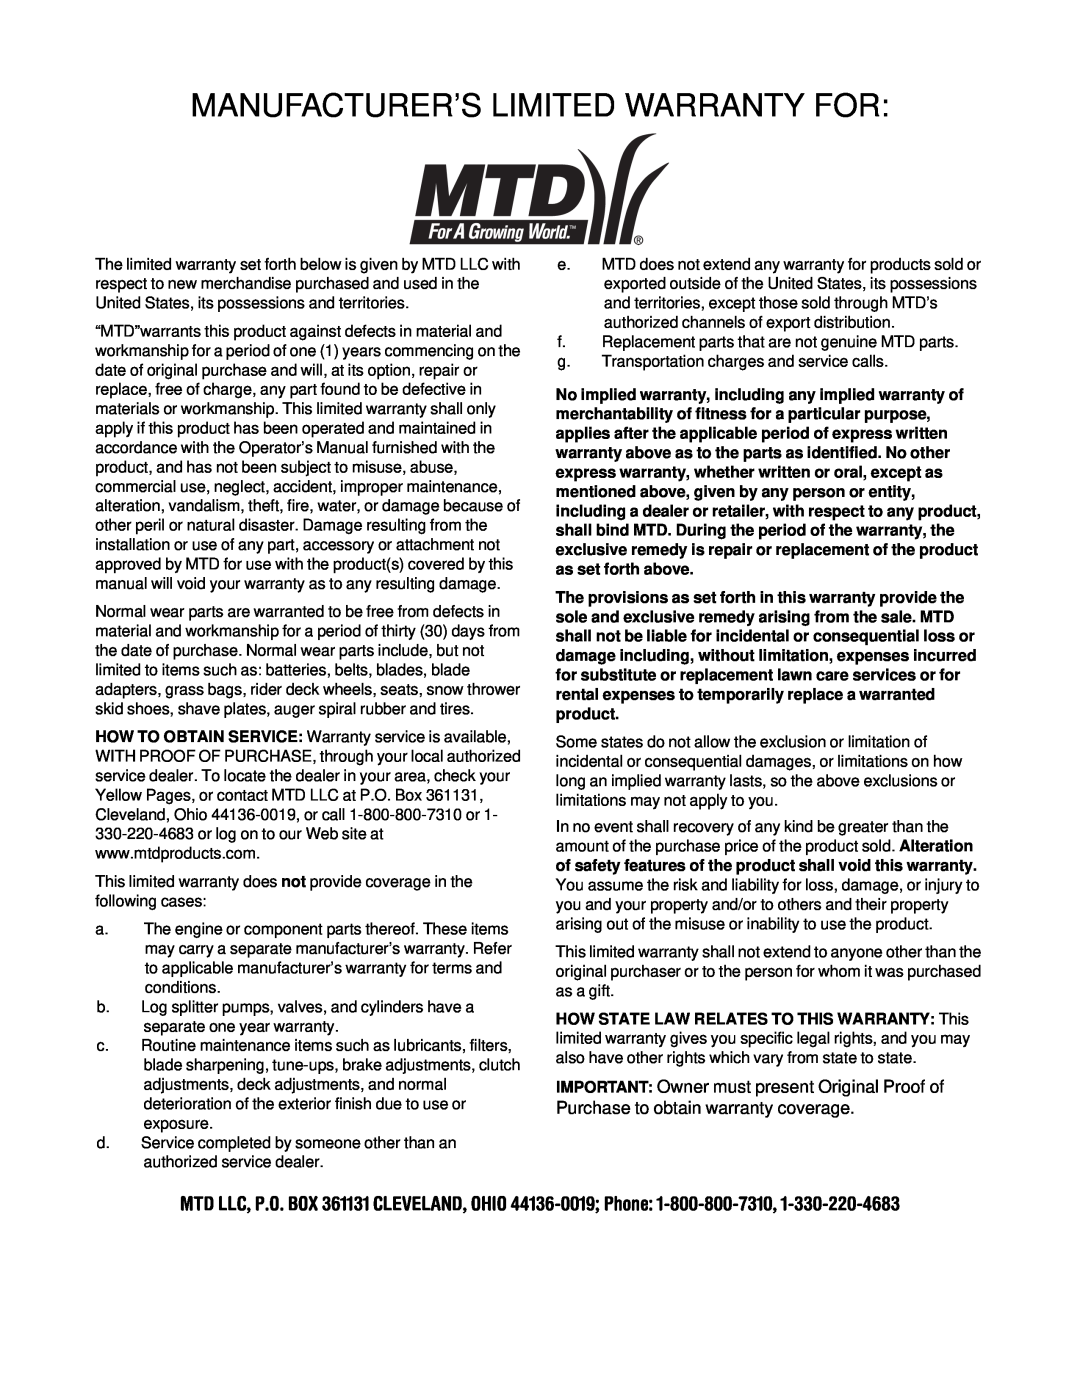 MTD 50 manual Manufacturer’S Limited Warranty For 